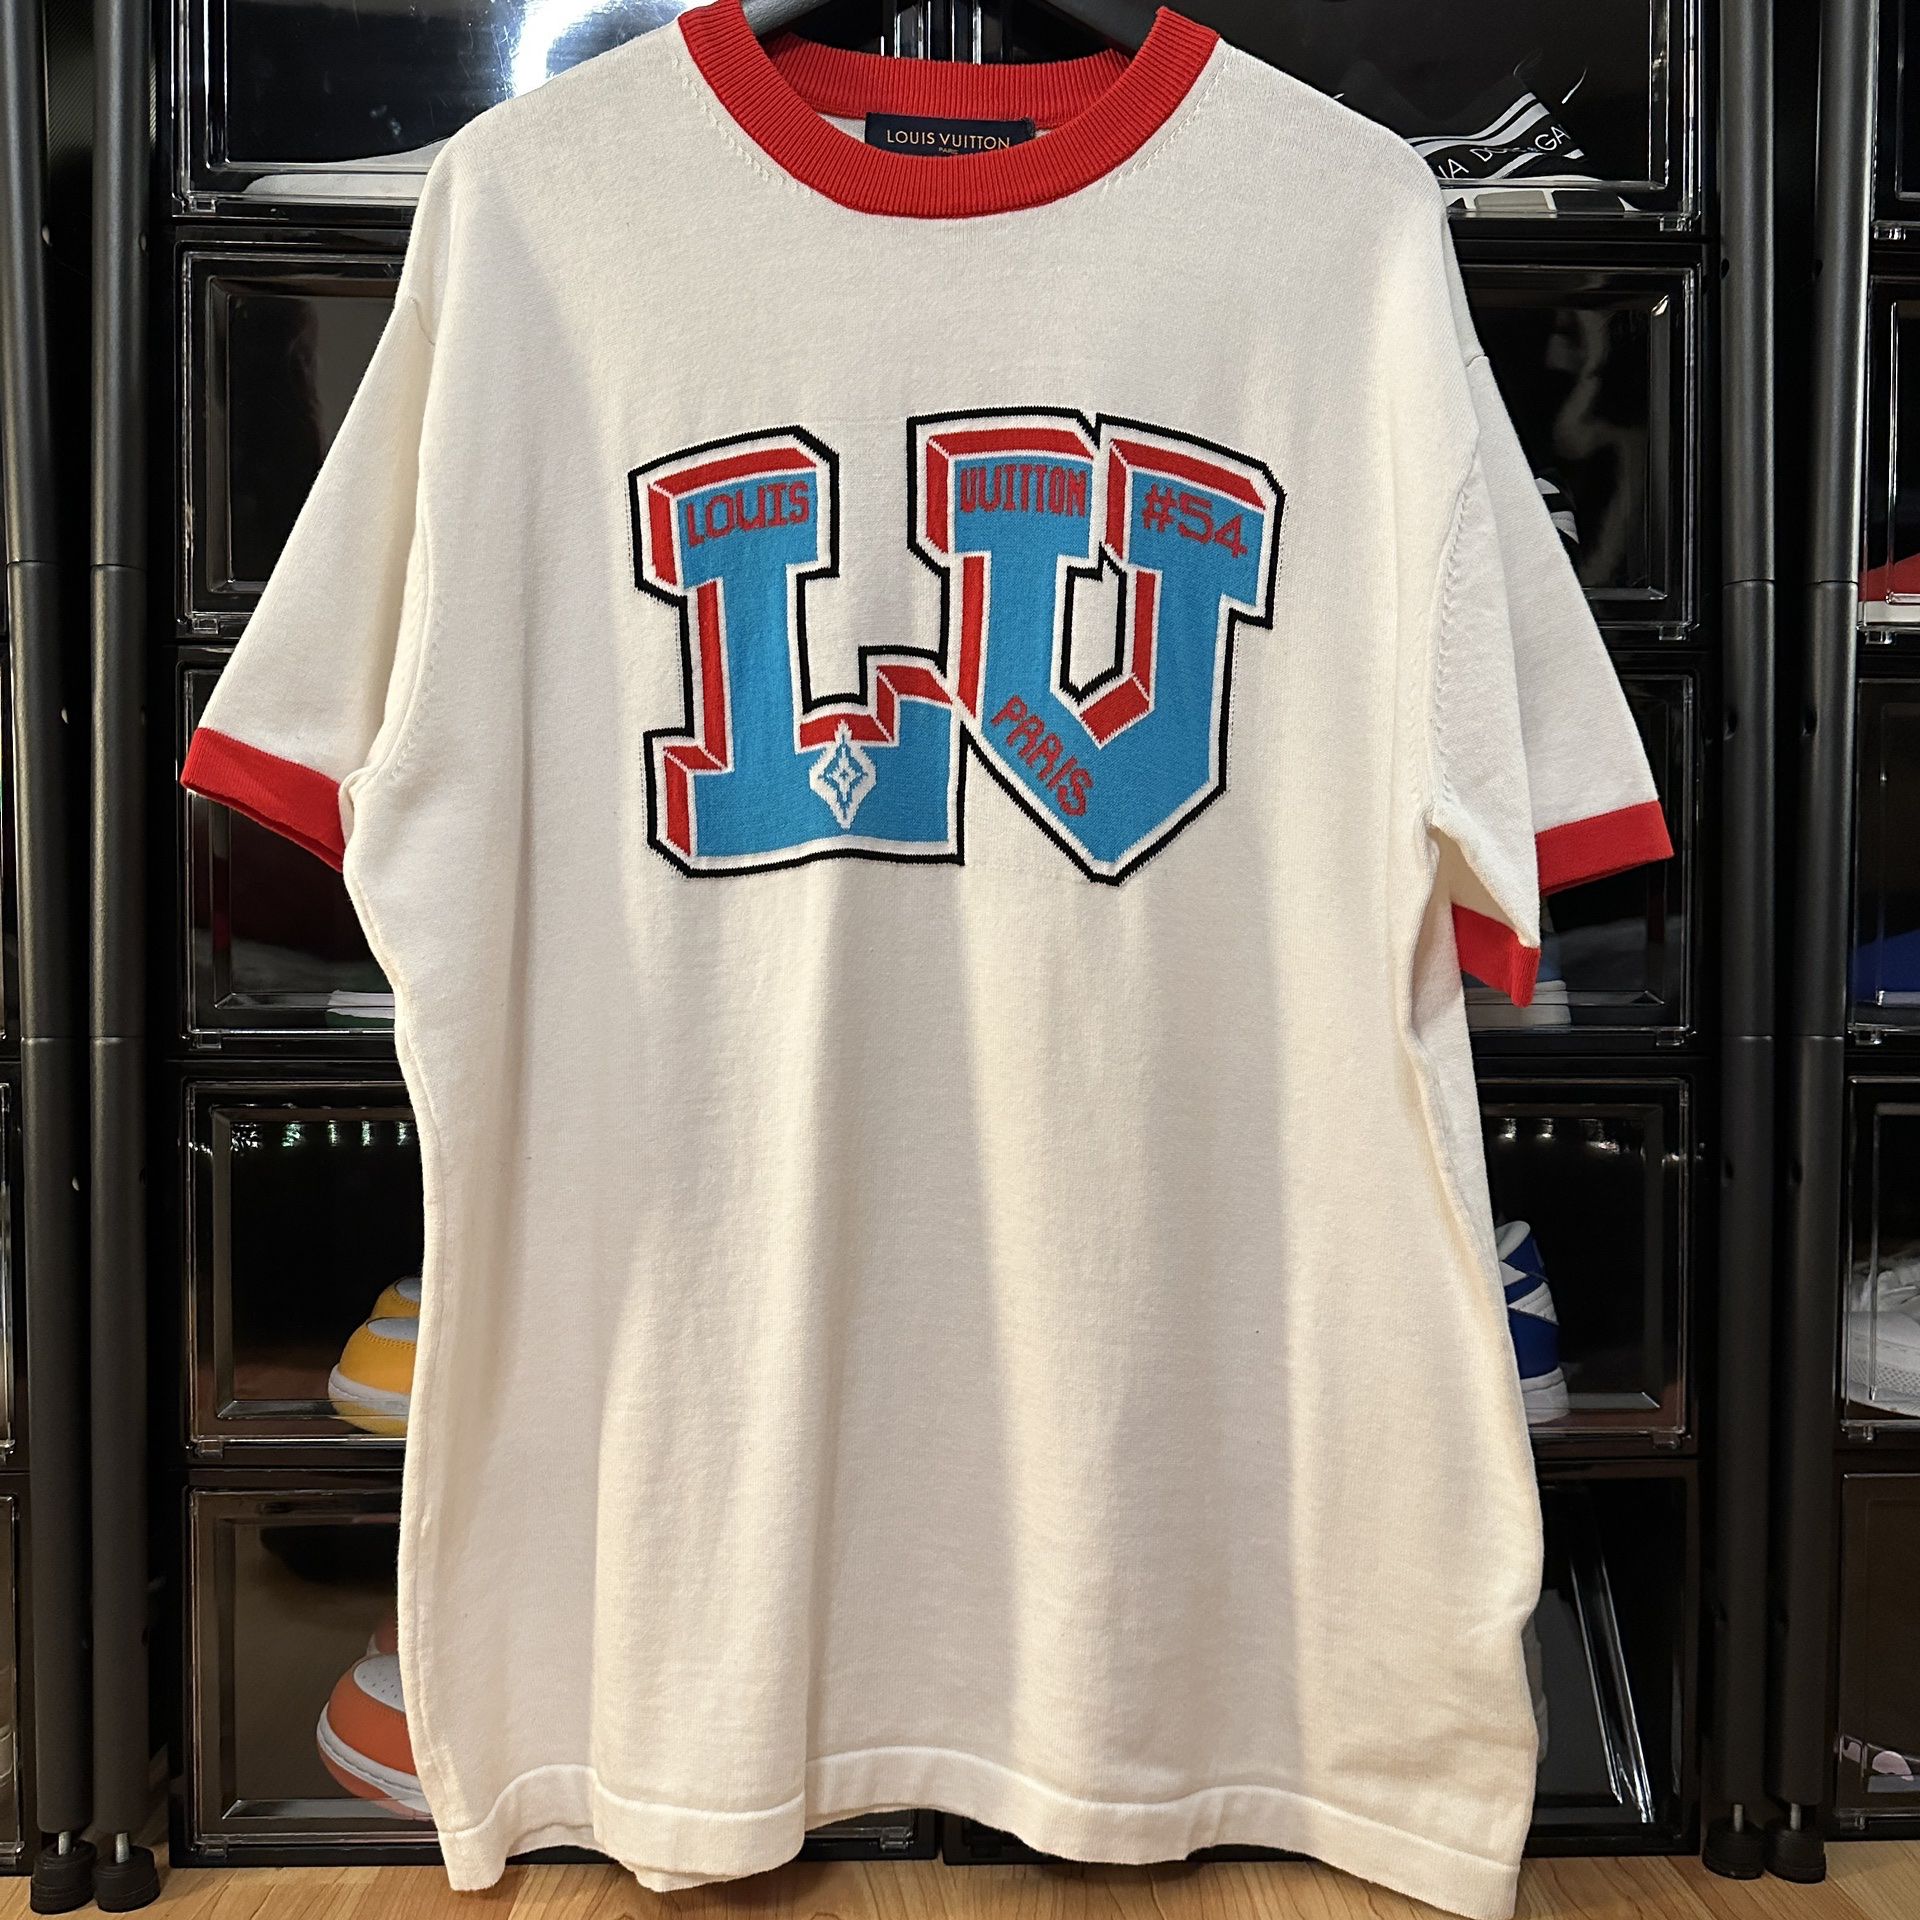 Lv Shirt Men Size Large White for Sale in Medley, FL - OfferUp